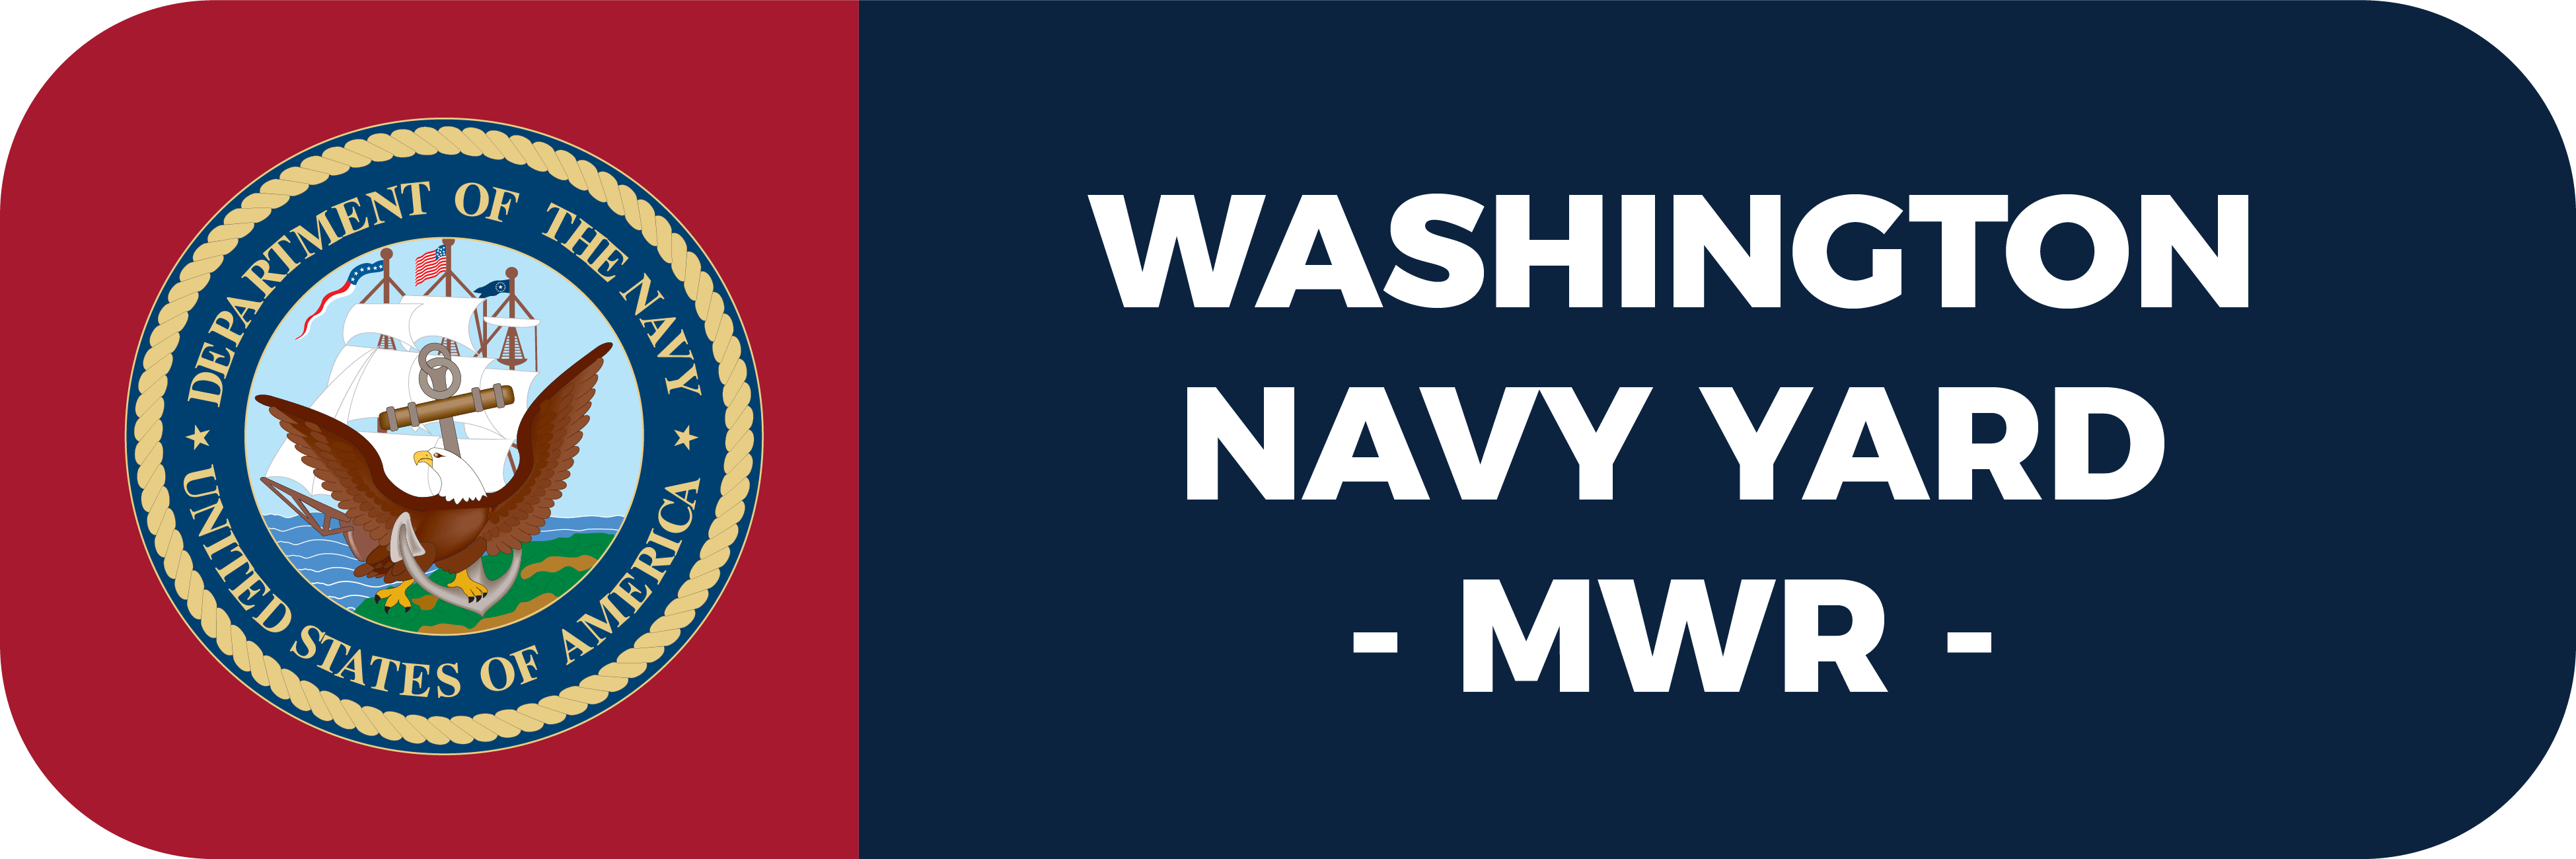 Navy Yard MWR Button